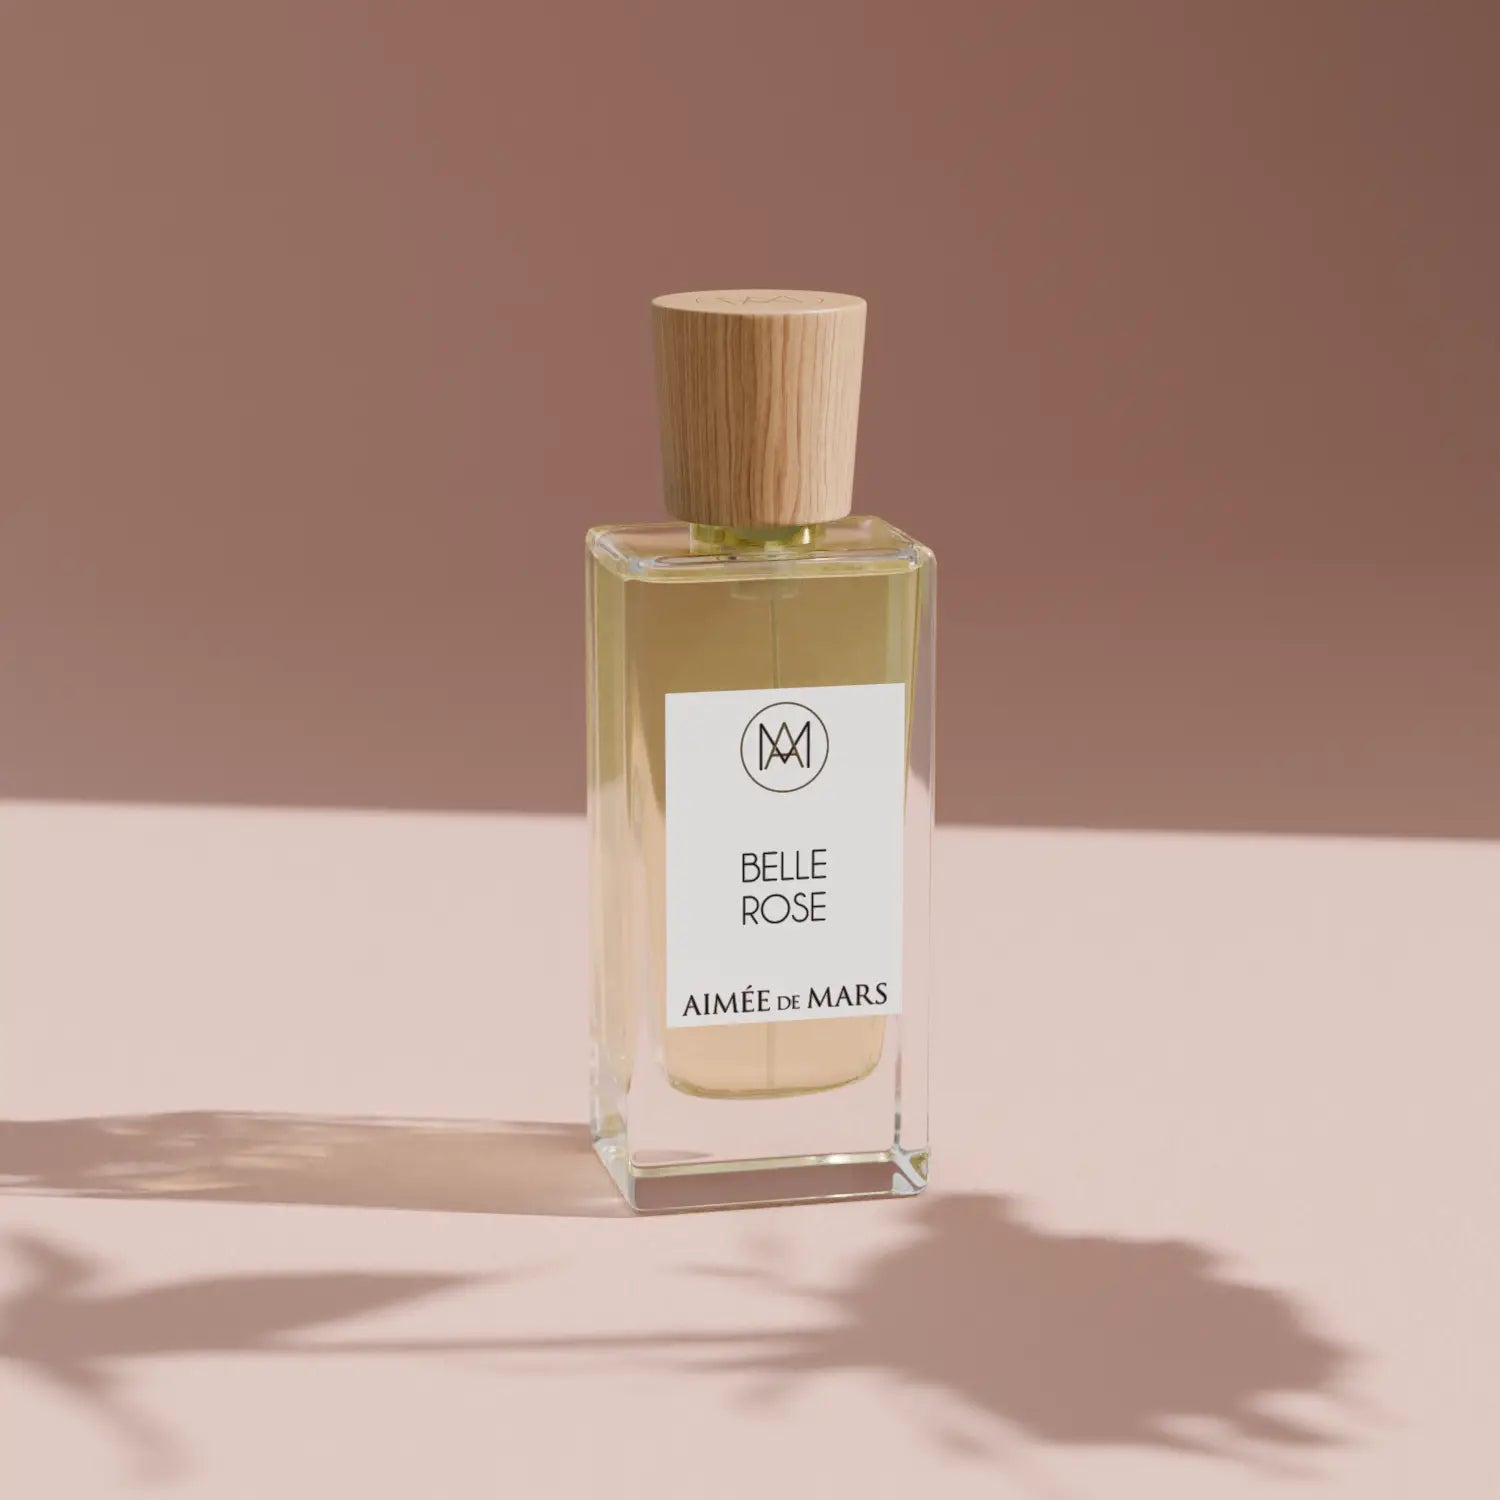 Belle Rose fragrance